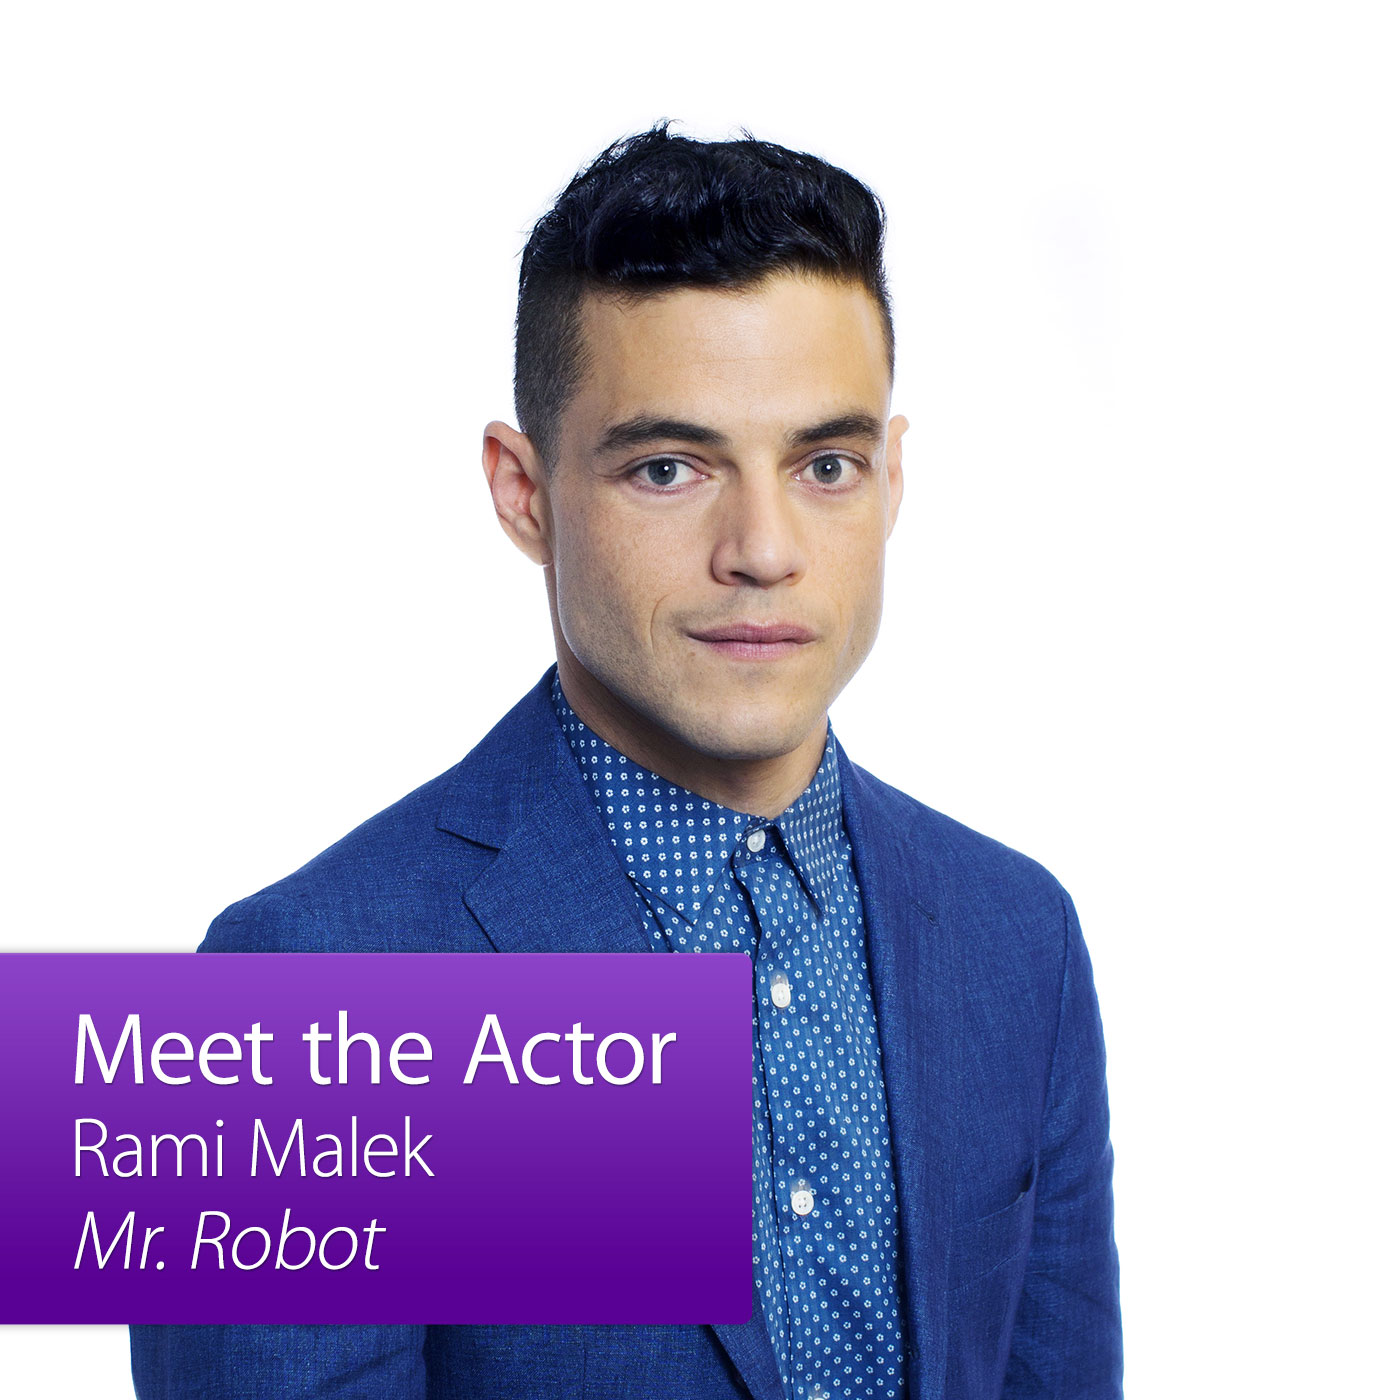 Mr. Robot: Meet the Actor